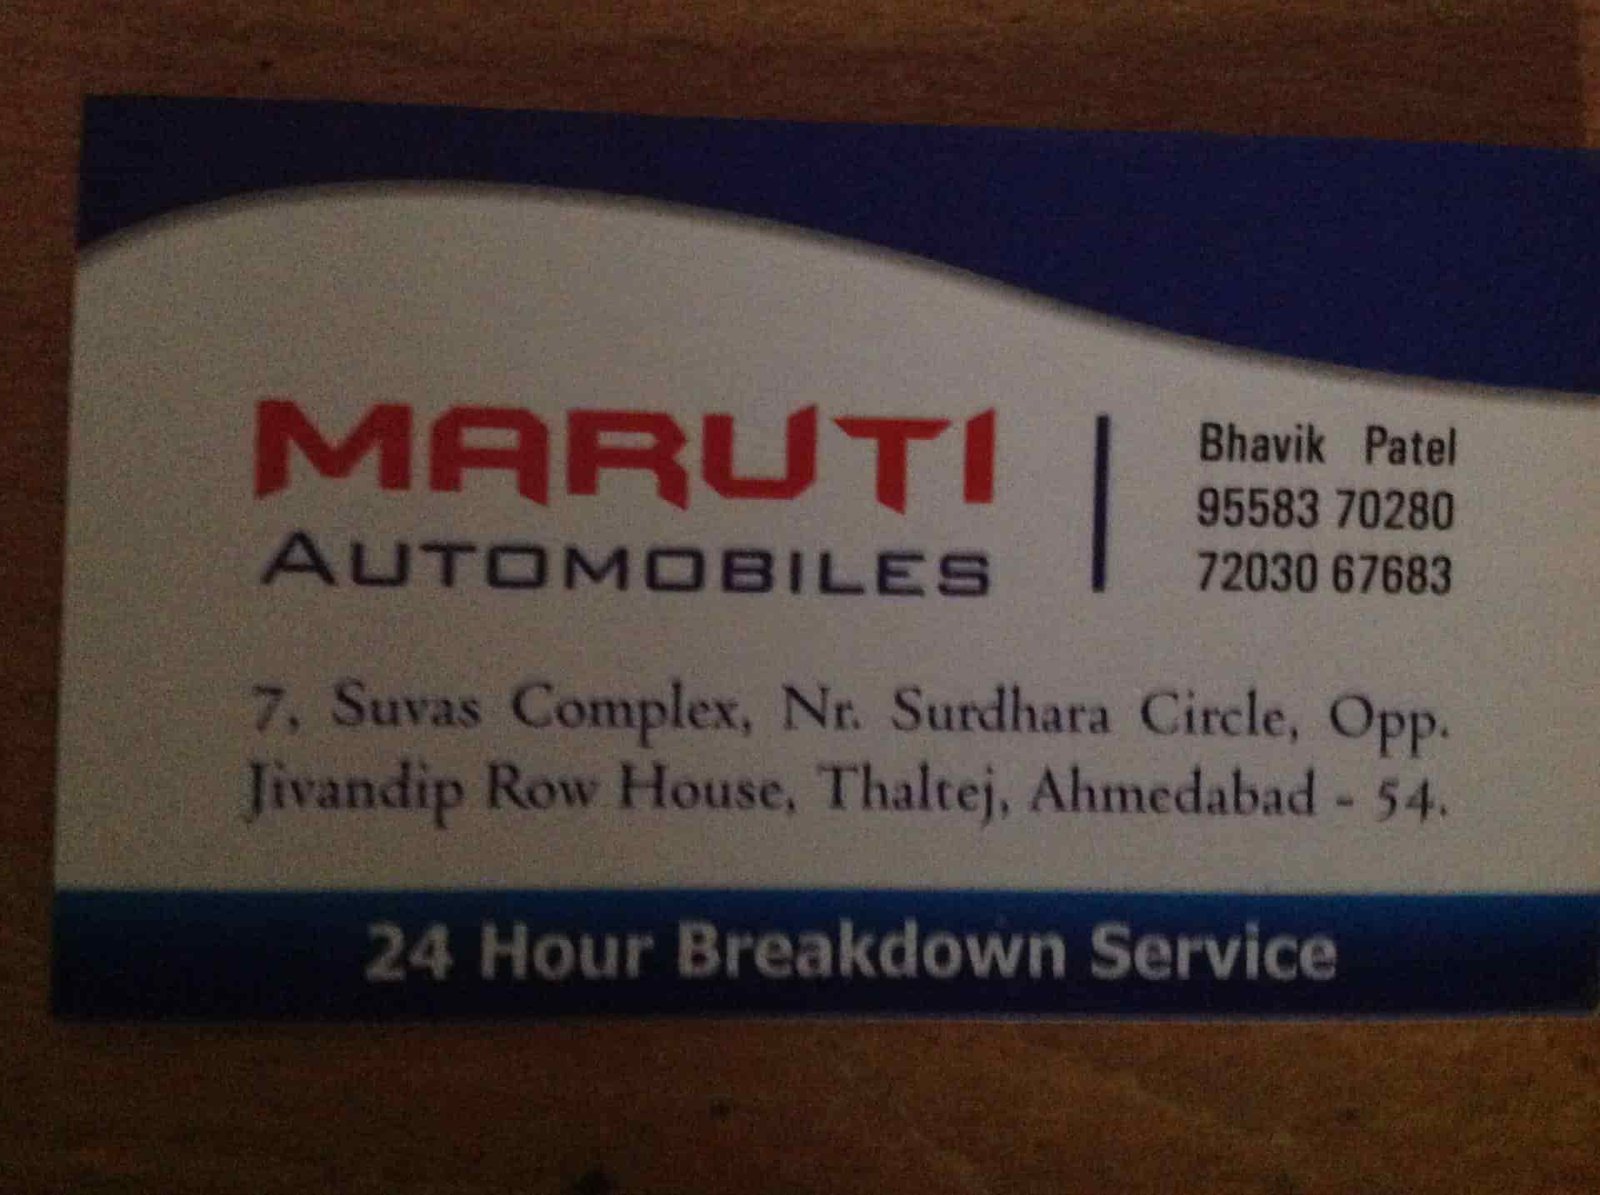 Maruti Automobiles